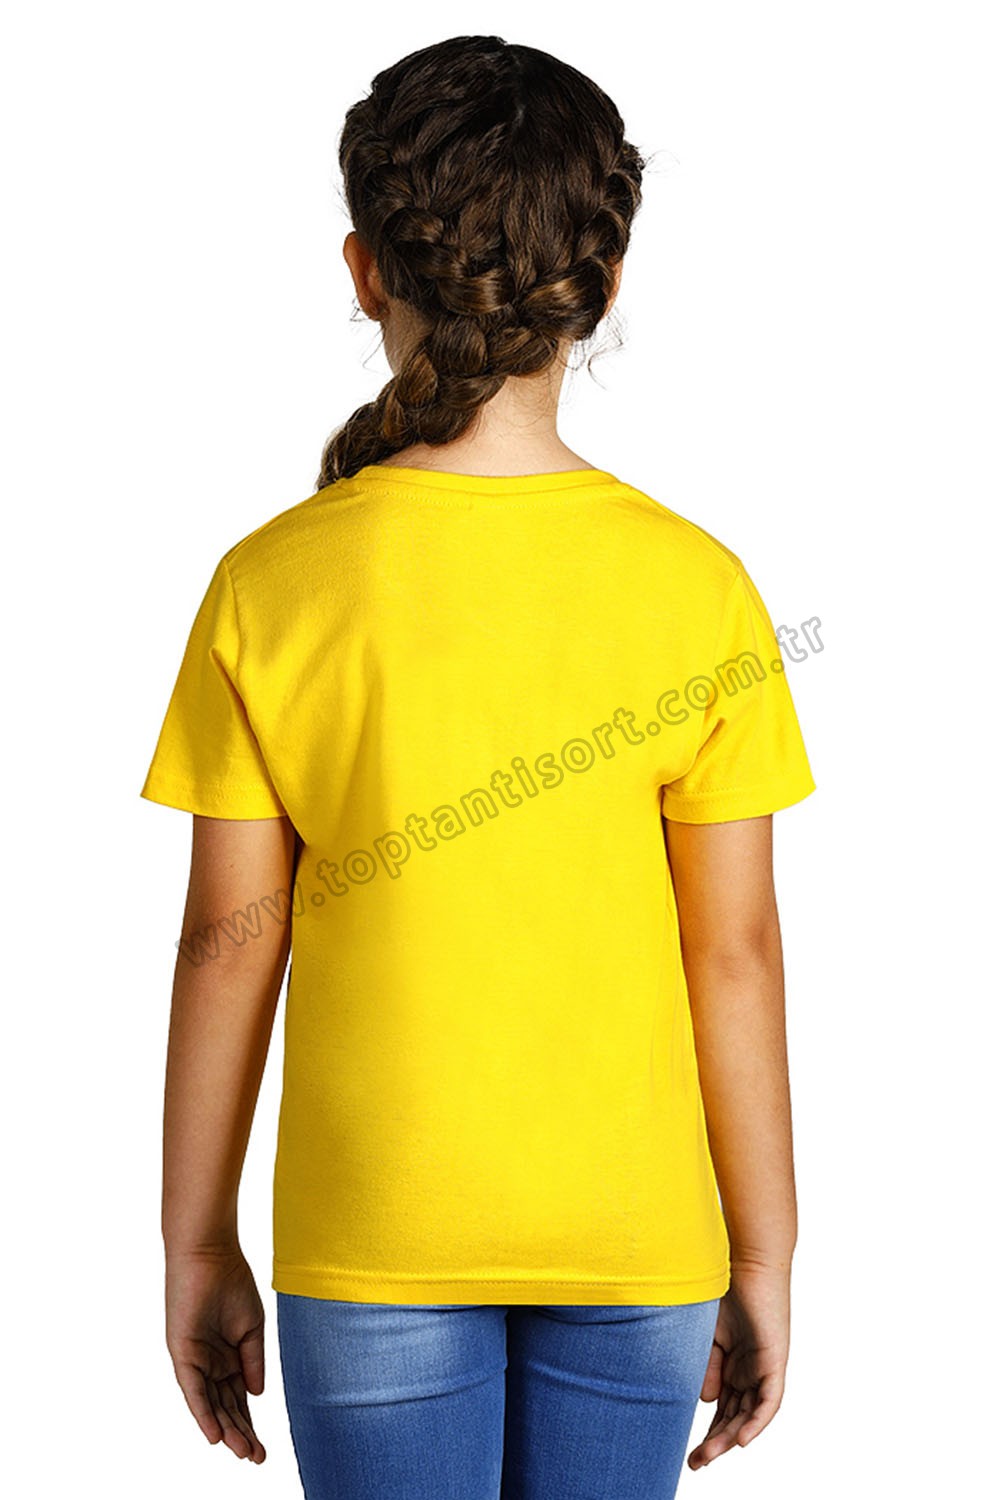 Sarı çocuk tişörtü